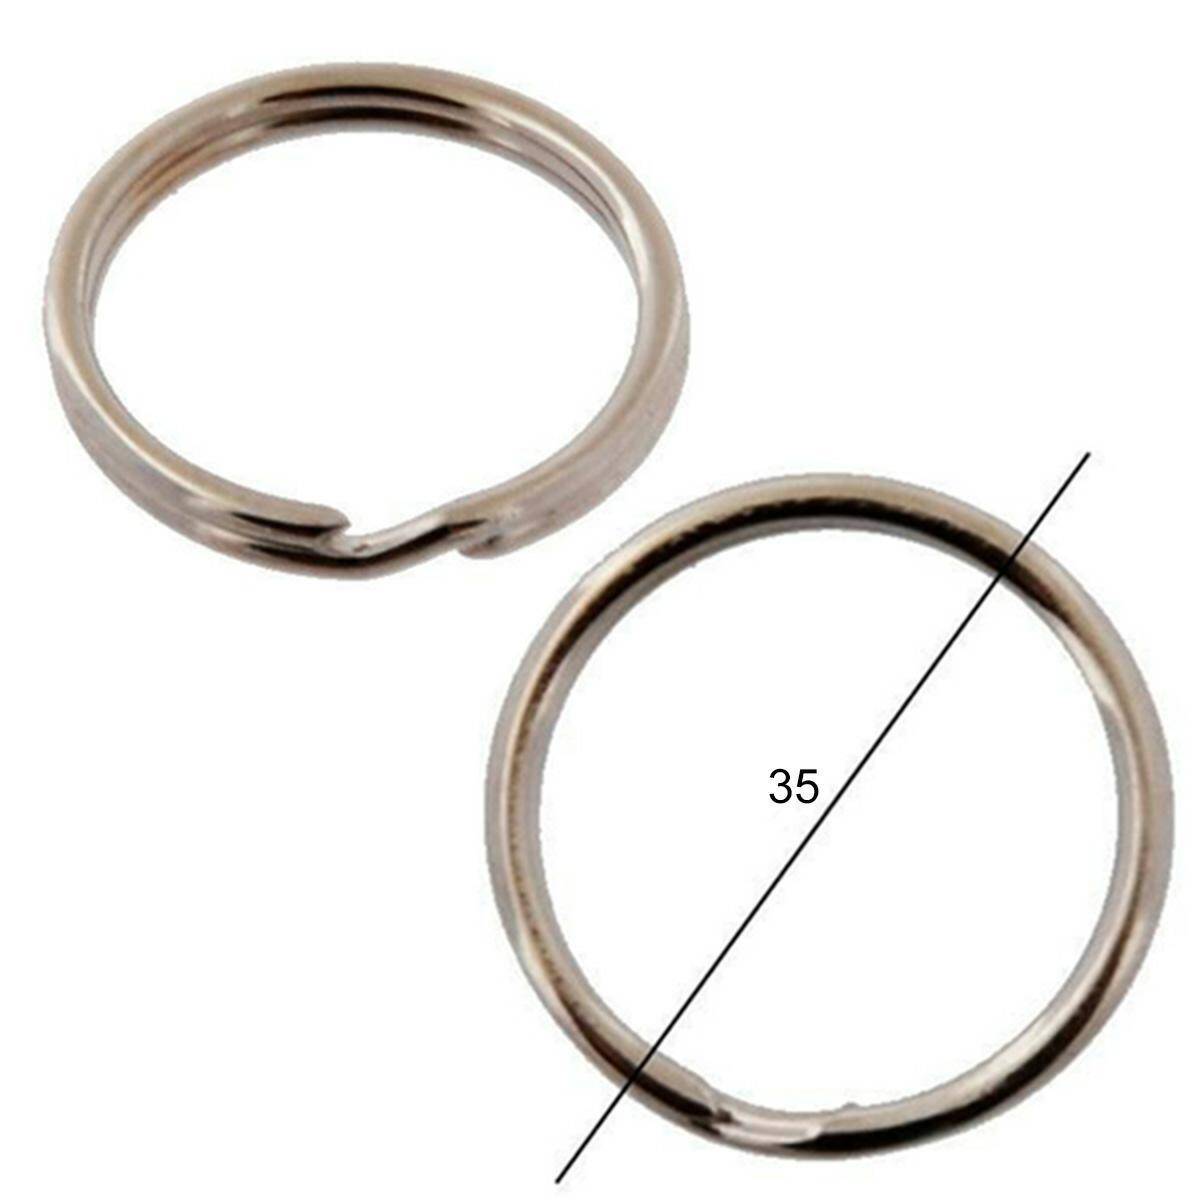 Key rings - 35mm